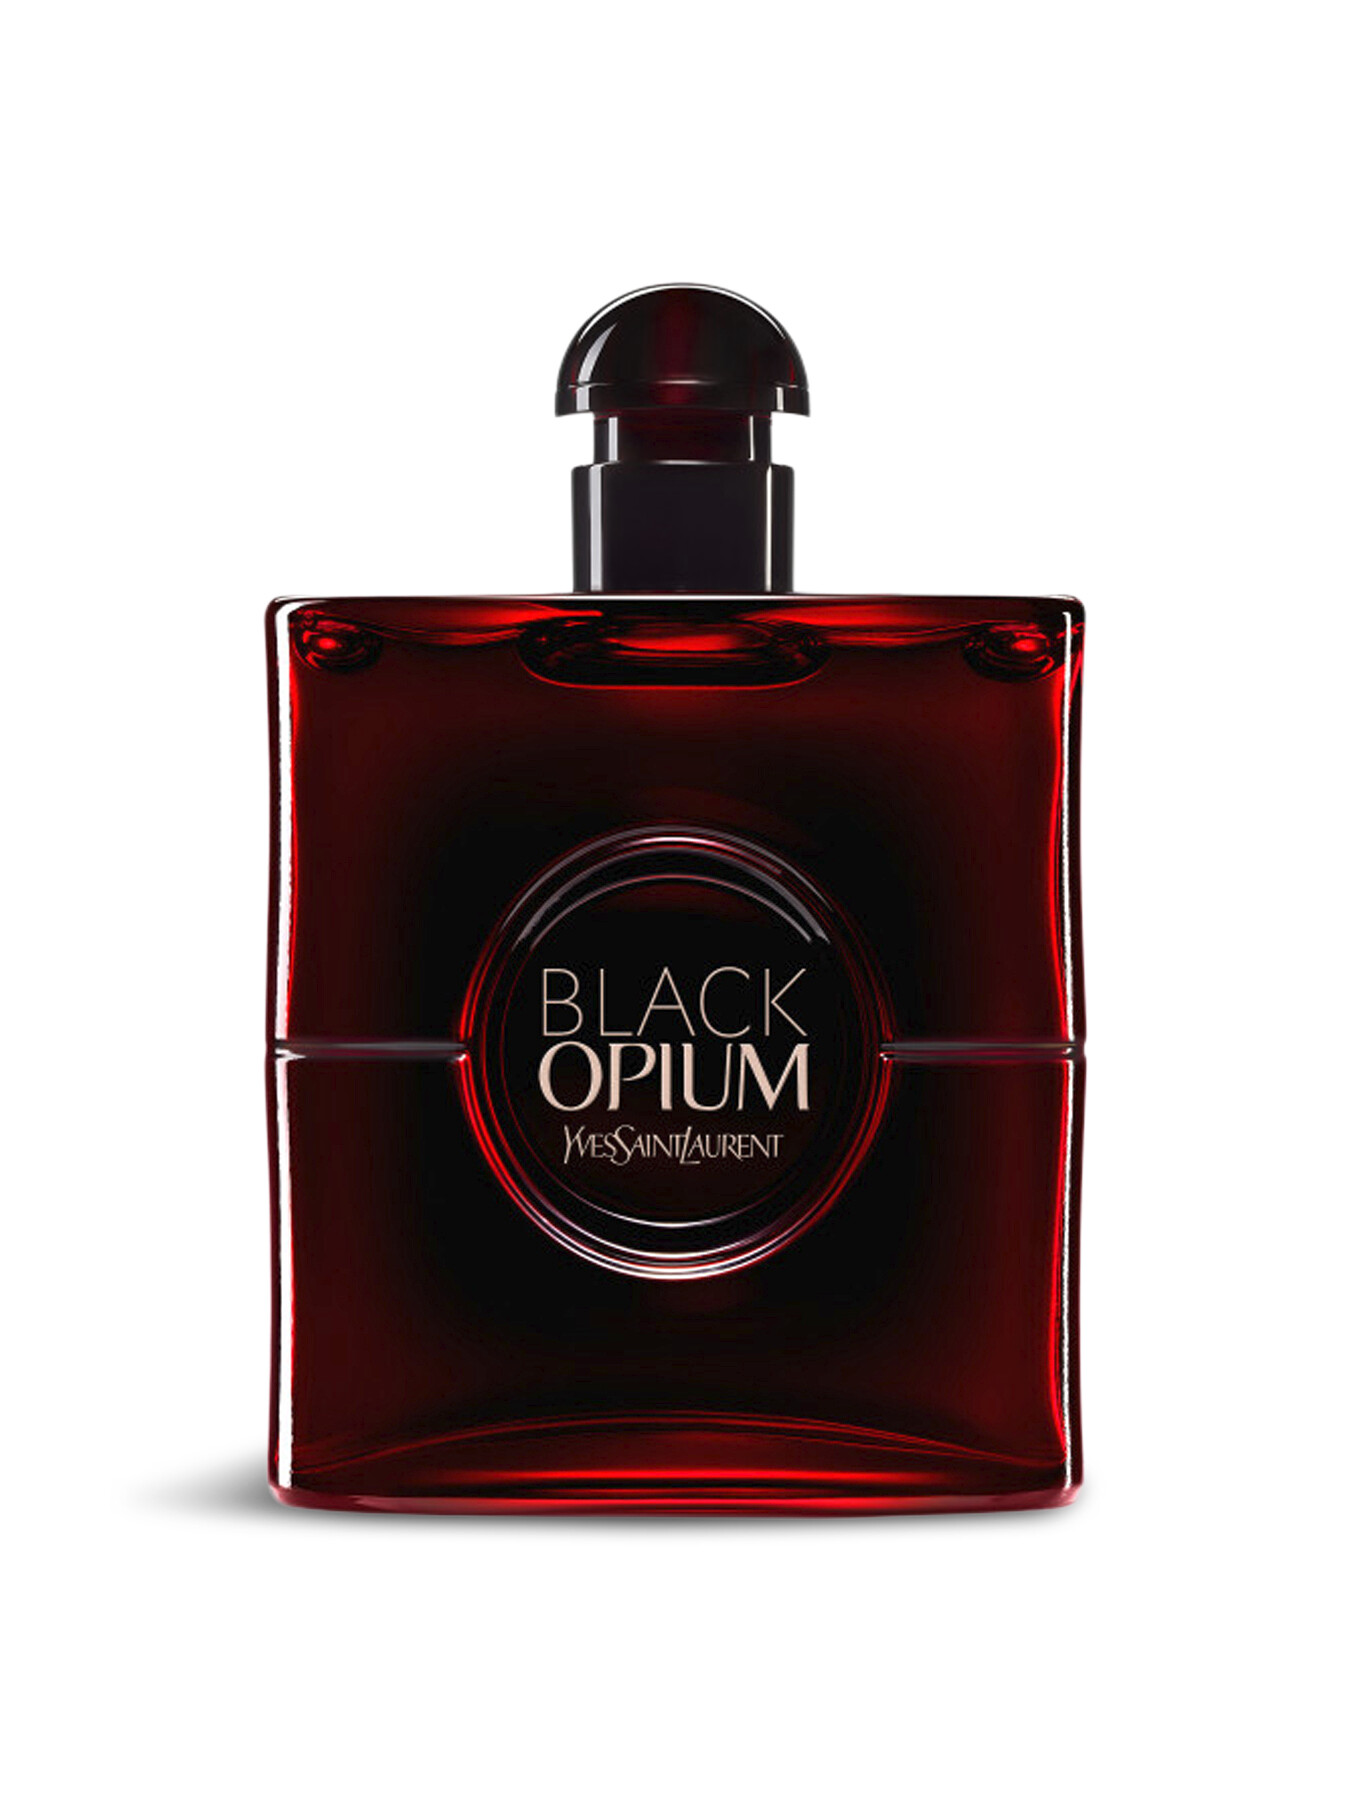 Ysl Black Opium Over Red Eau De Parfum 90ml In White